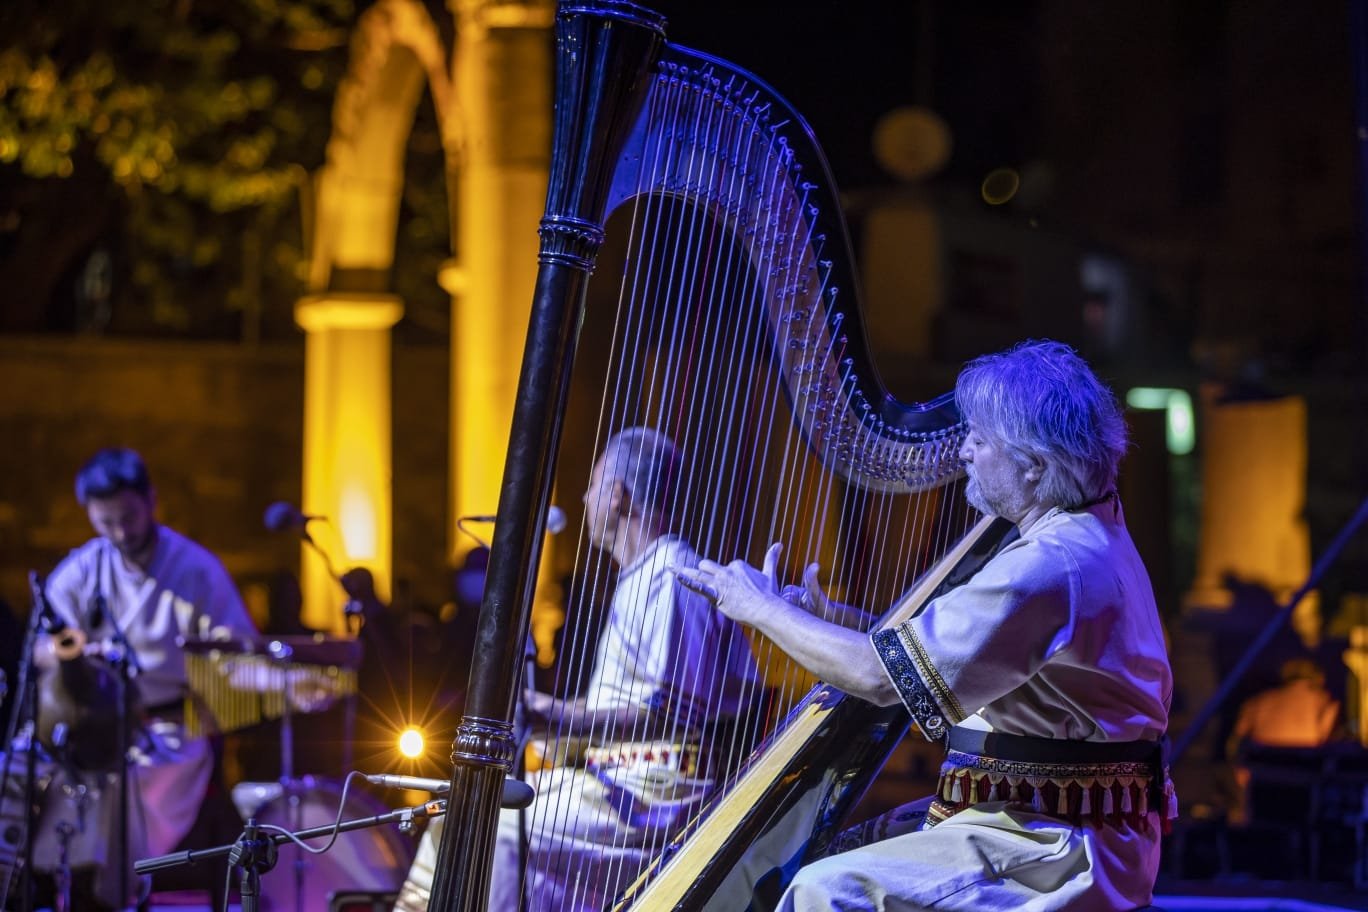 Arpanatolia comprises of Çağatay Akyol (M) on harp, Ferhat Erdem (R) on sipsi-kaval and Cemal Özkızıltaş on authentic percussion. (Courtesy of Akyol) 